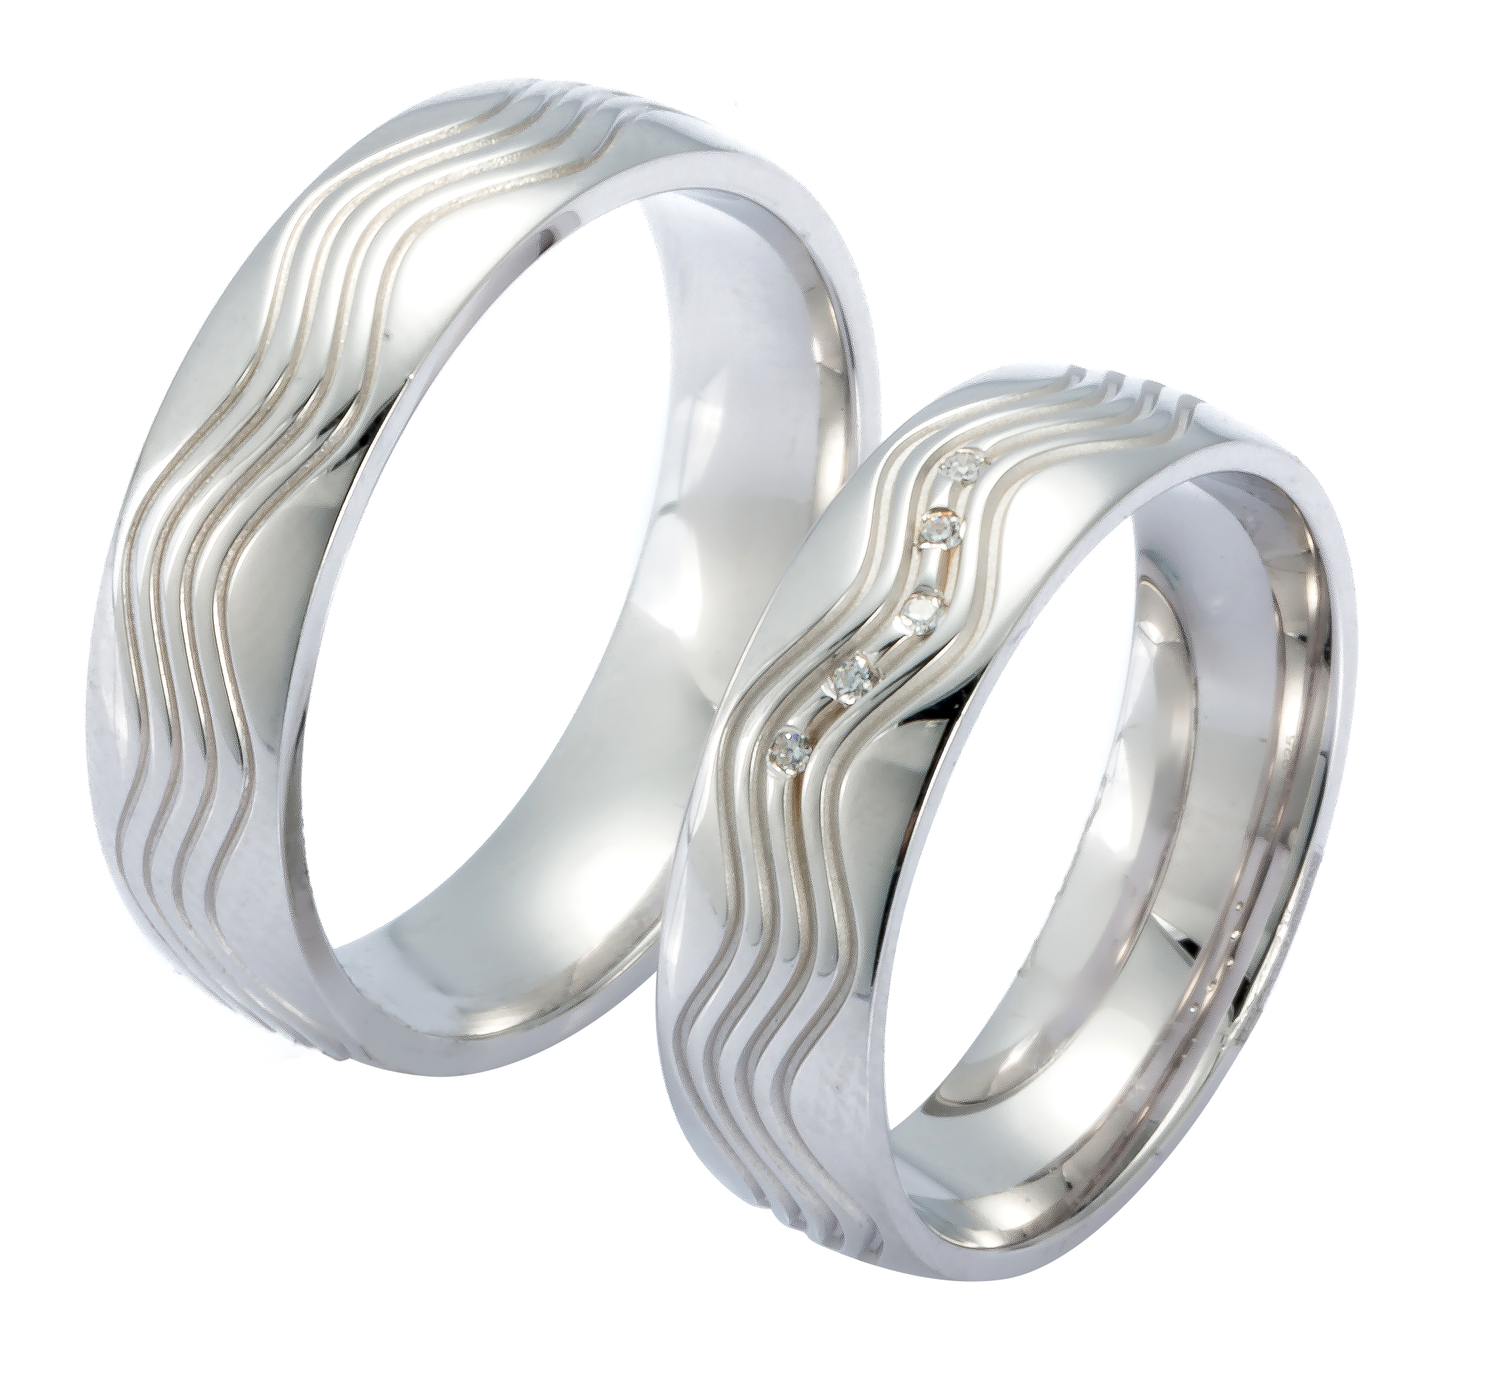 Ring Silber 925  mit Wellenmuster, Partnerringe